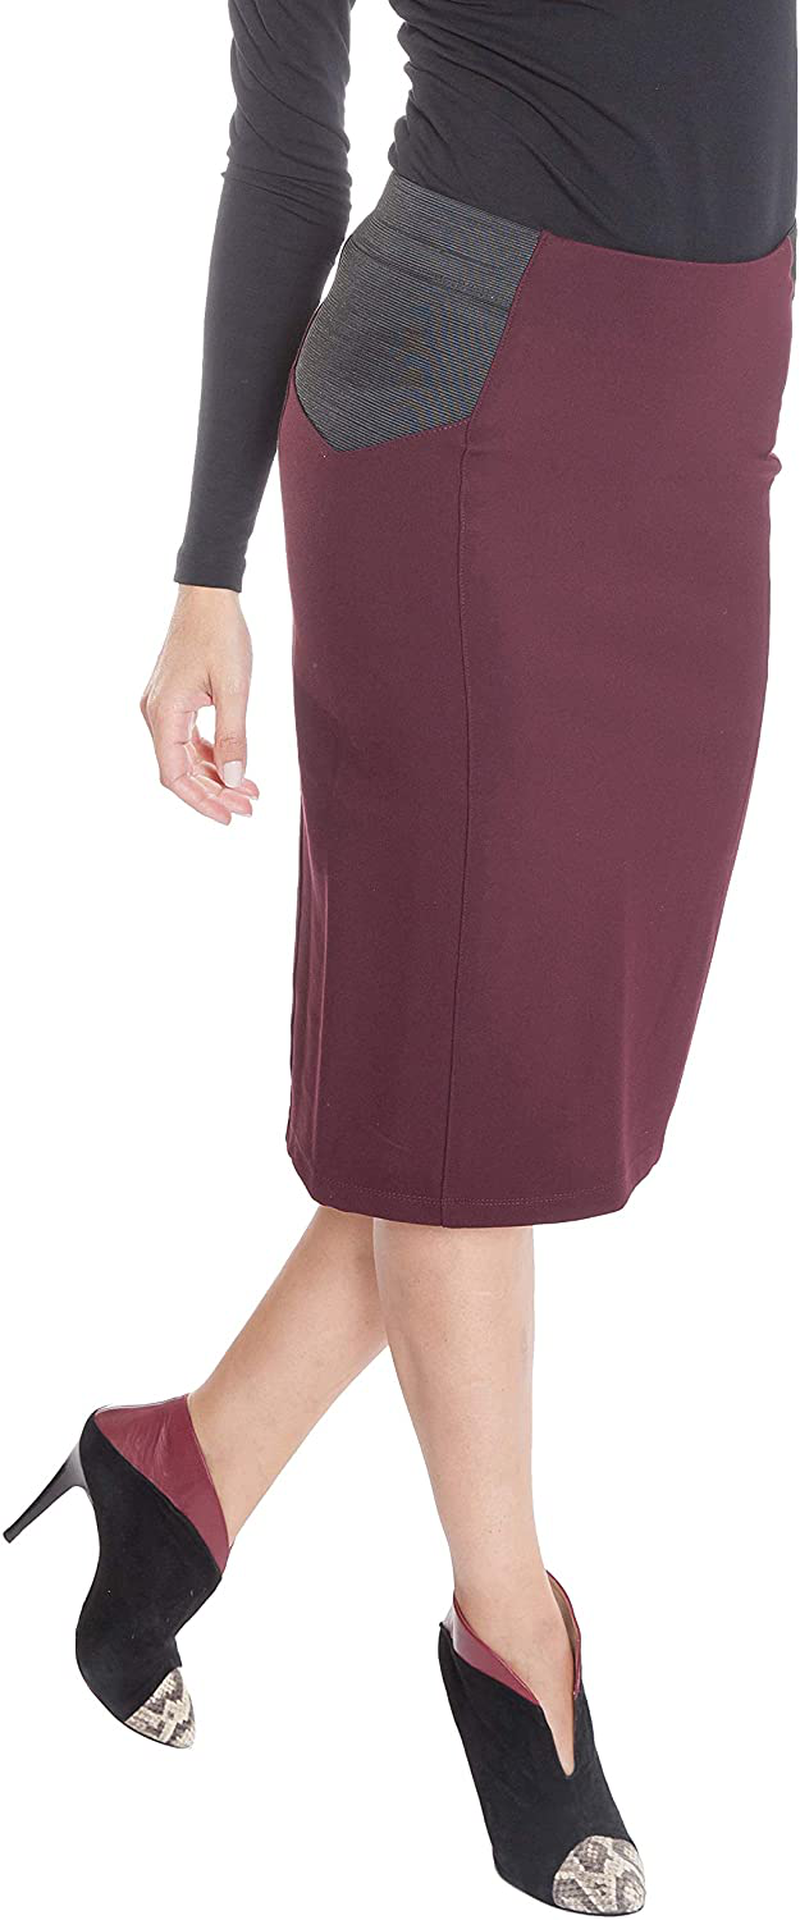 ESTEEZ Women's Ponte Midi Bodycon Pencil Skirt - Modest Below Knee Length - Office - Charlotte